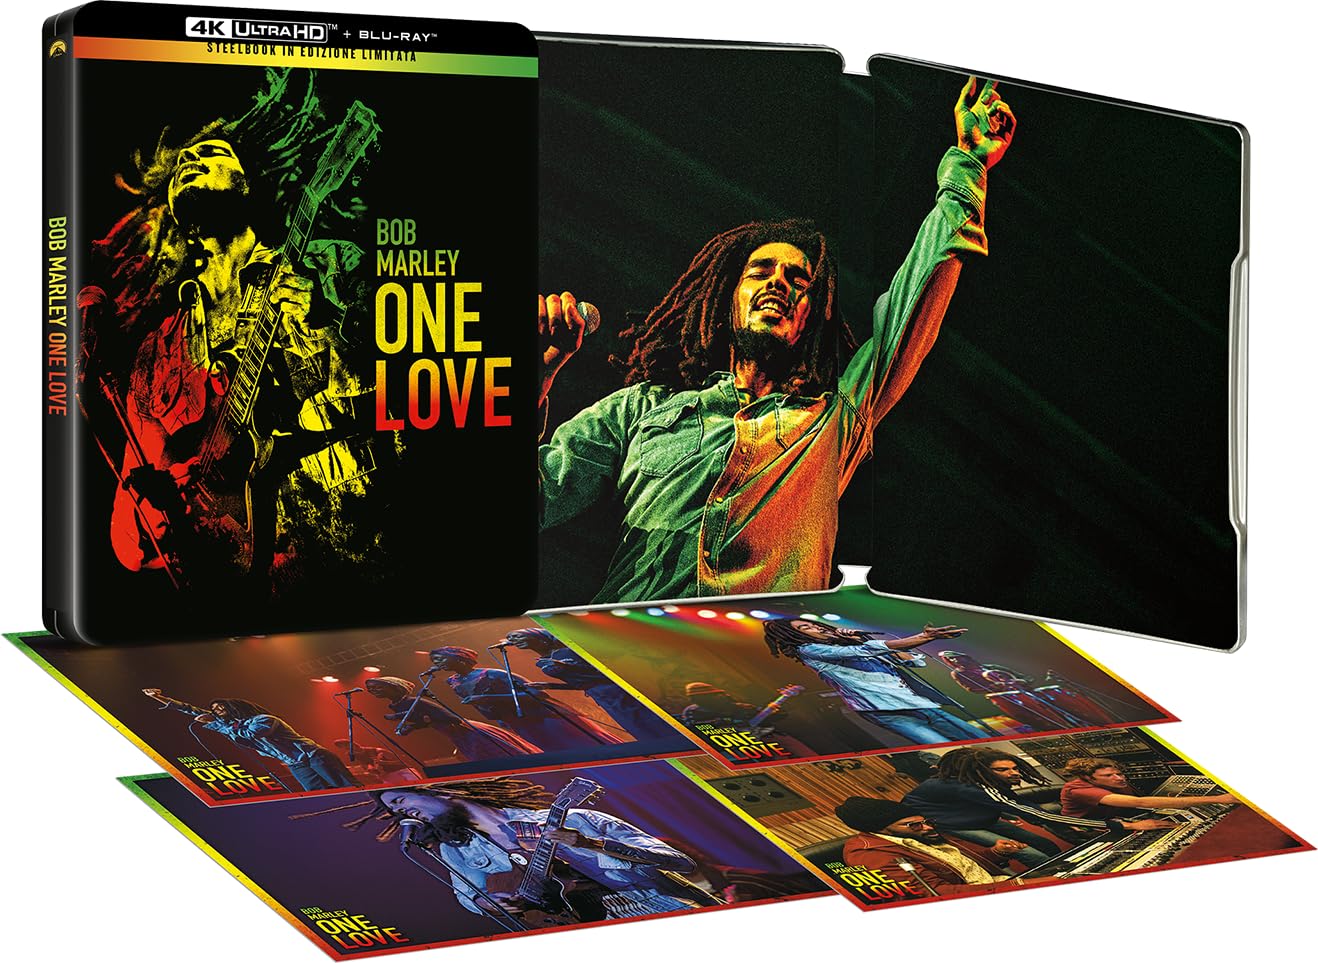 Bob Marley: One love è disponibile da oggi in dvd, blu-ray e steelbook 4k uhd + blu-ray + blu-ray